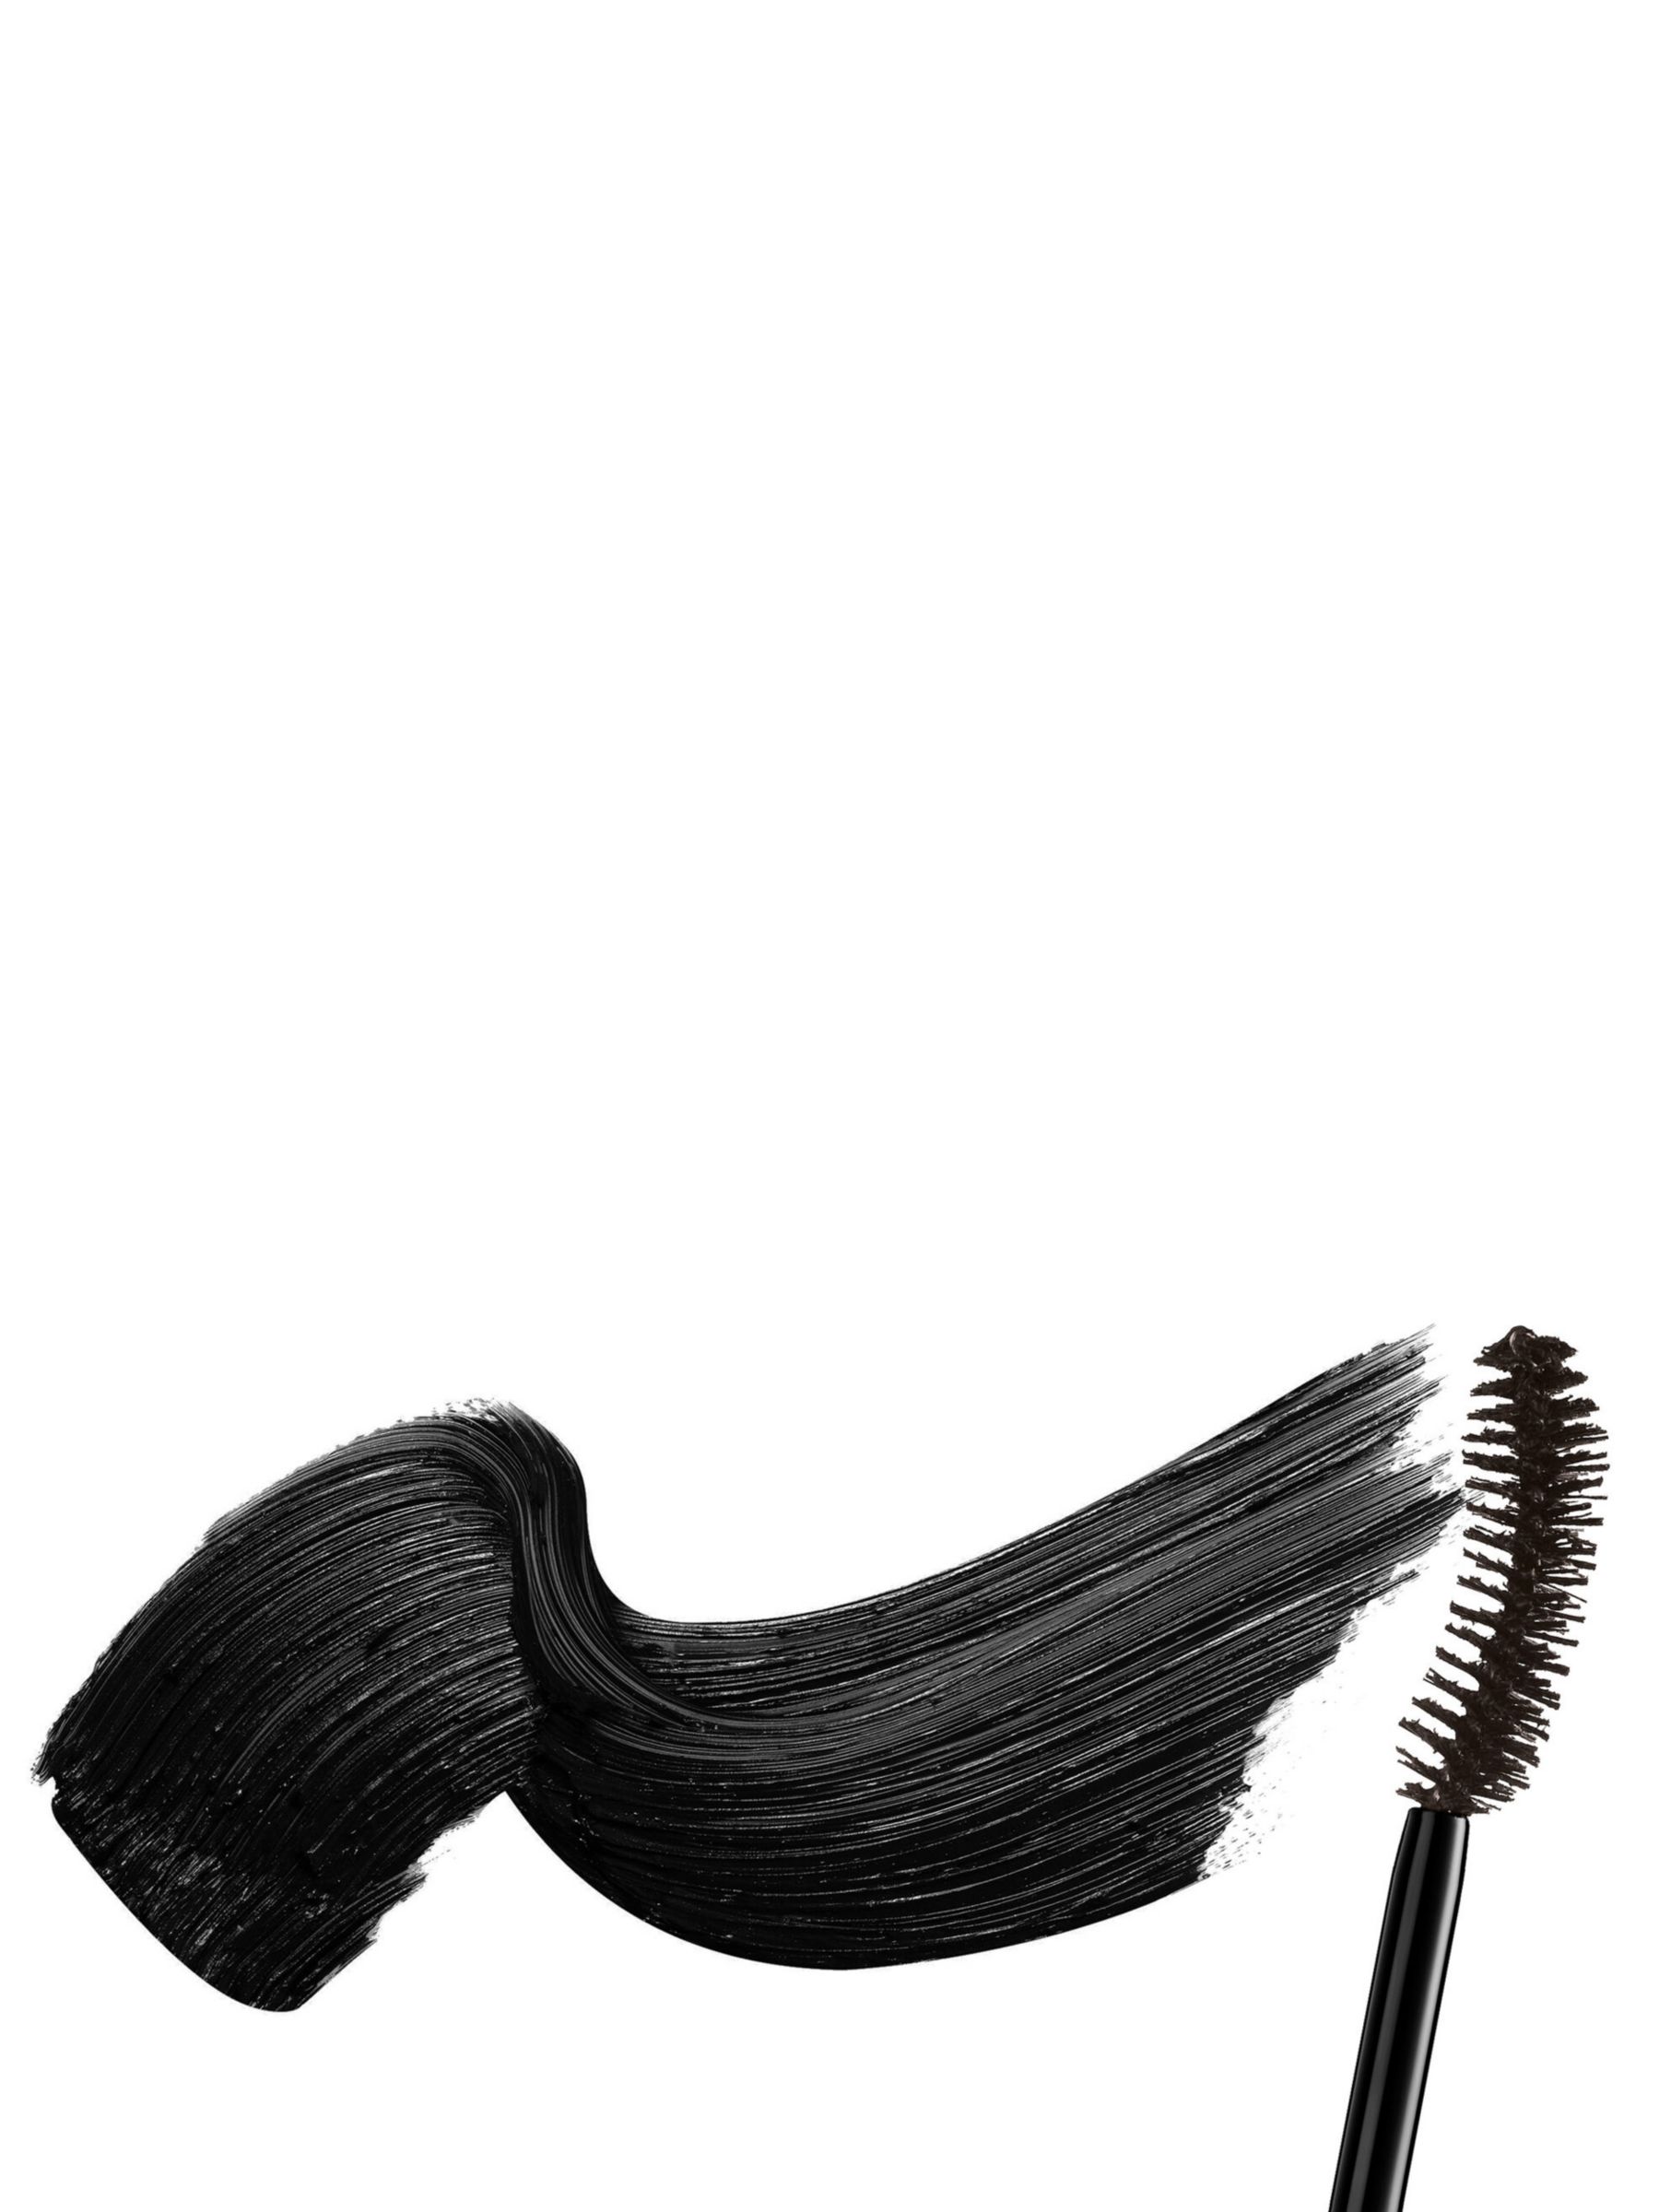 DIOR Diorshow Iconic Overcurl Mascara Refillable, 090 Black